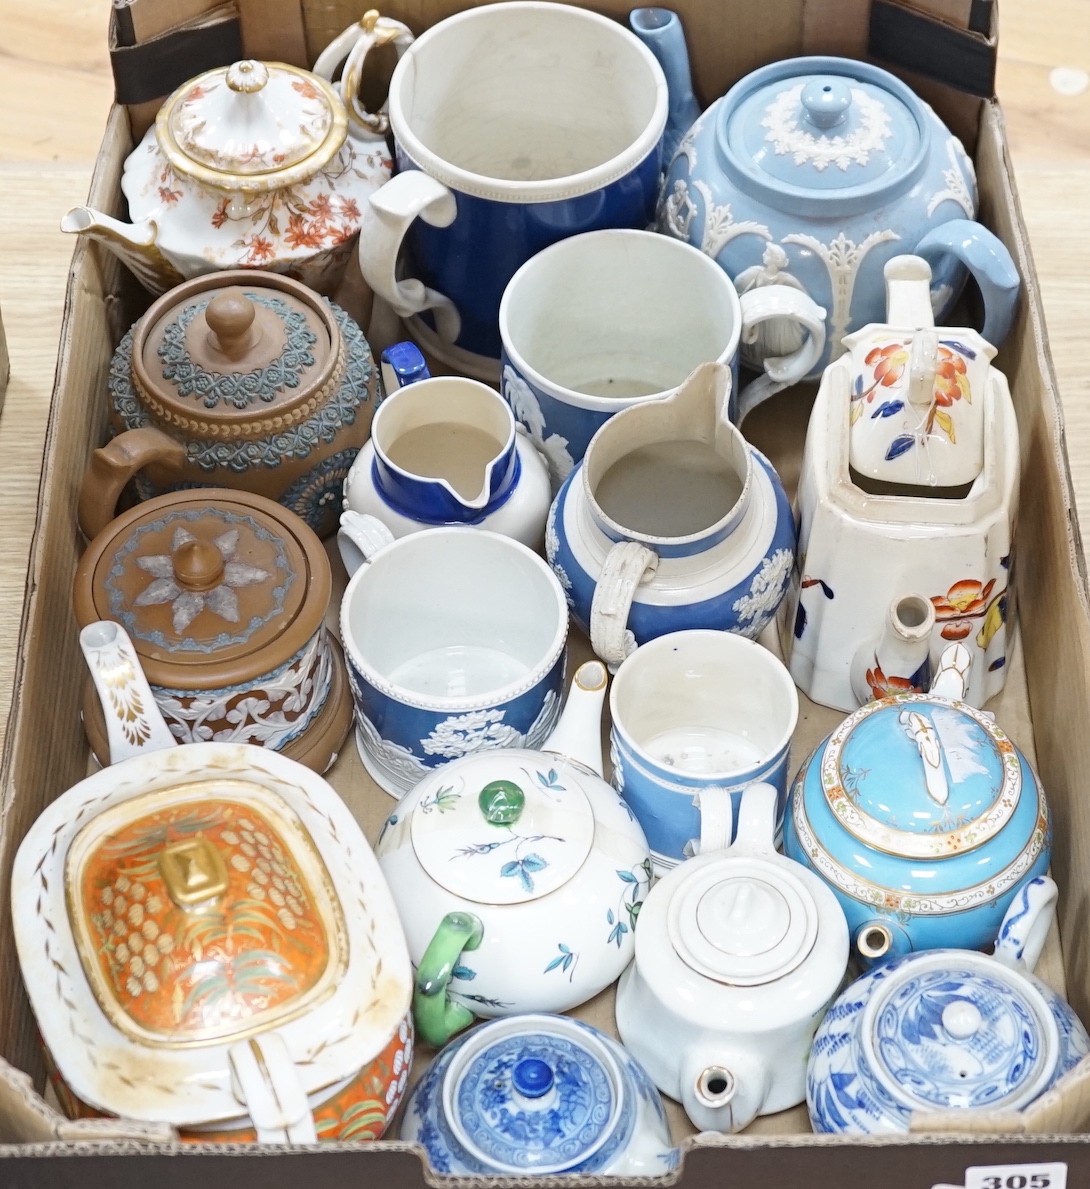 A large quantity of various teapots